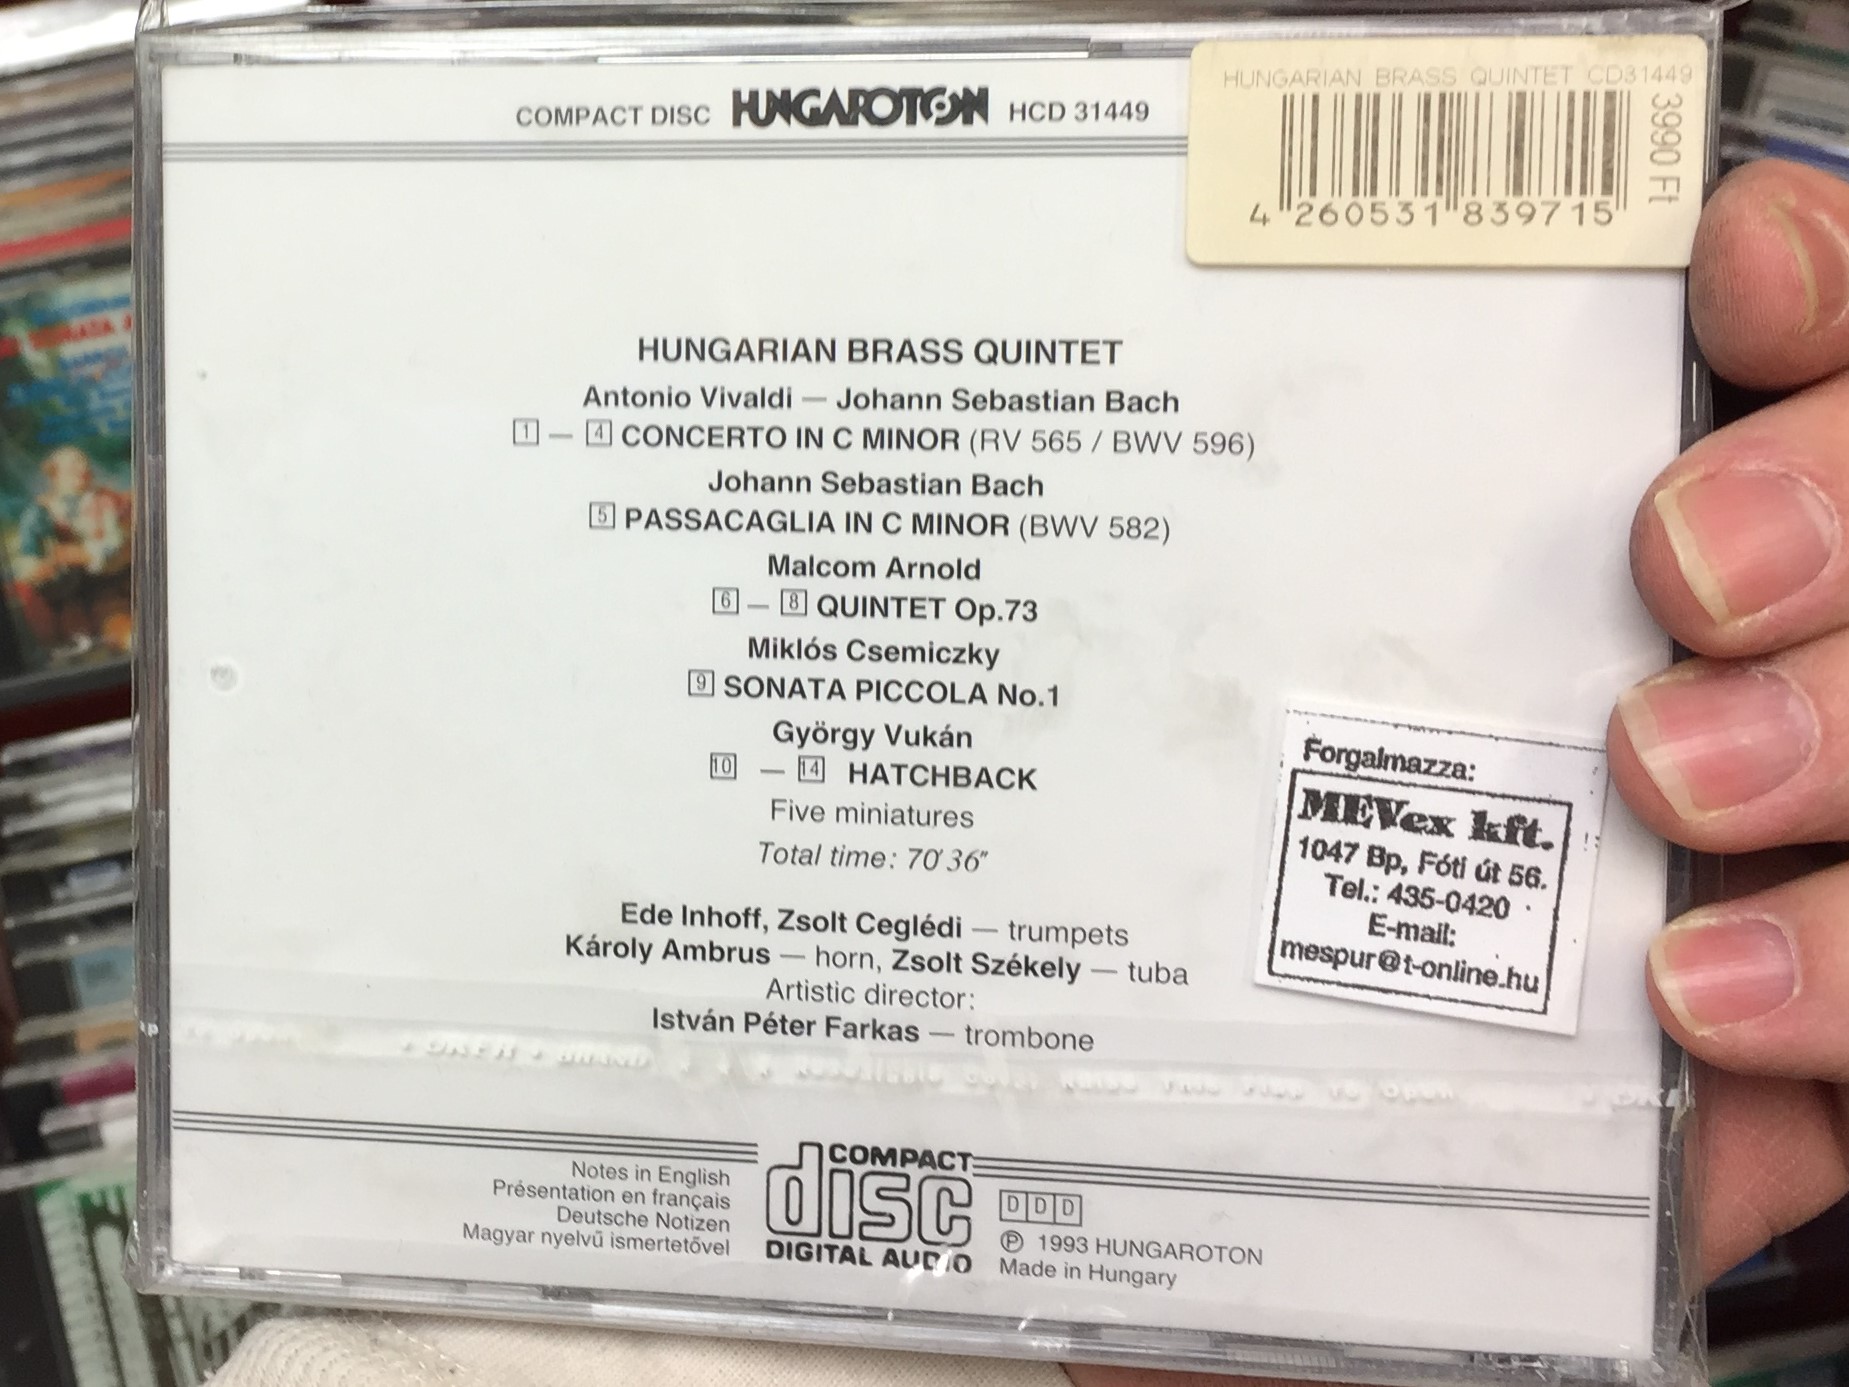 hungarian-brass-quintet-johann-sebastian-bach-antonio-vivaldi-bach-malcolm-arnold-miklos-csemiczky-gyorgy-vukan-hungaroton-classic-audio-cd-1993-hcd-31449-2-.jpg